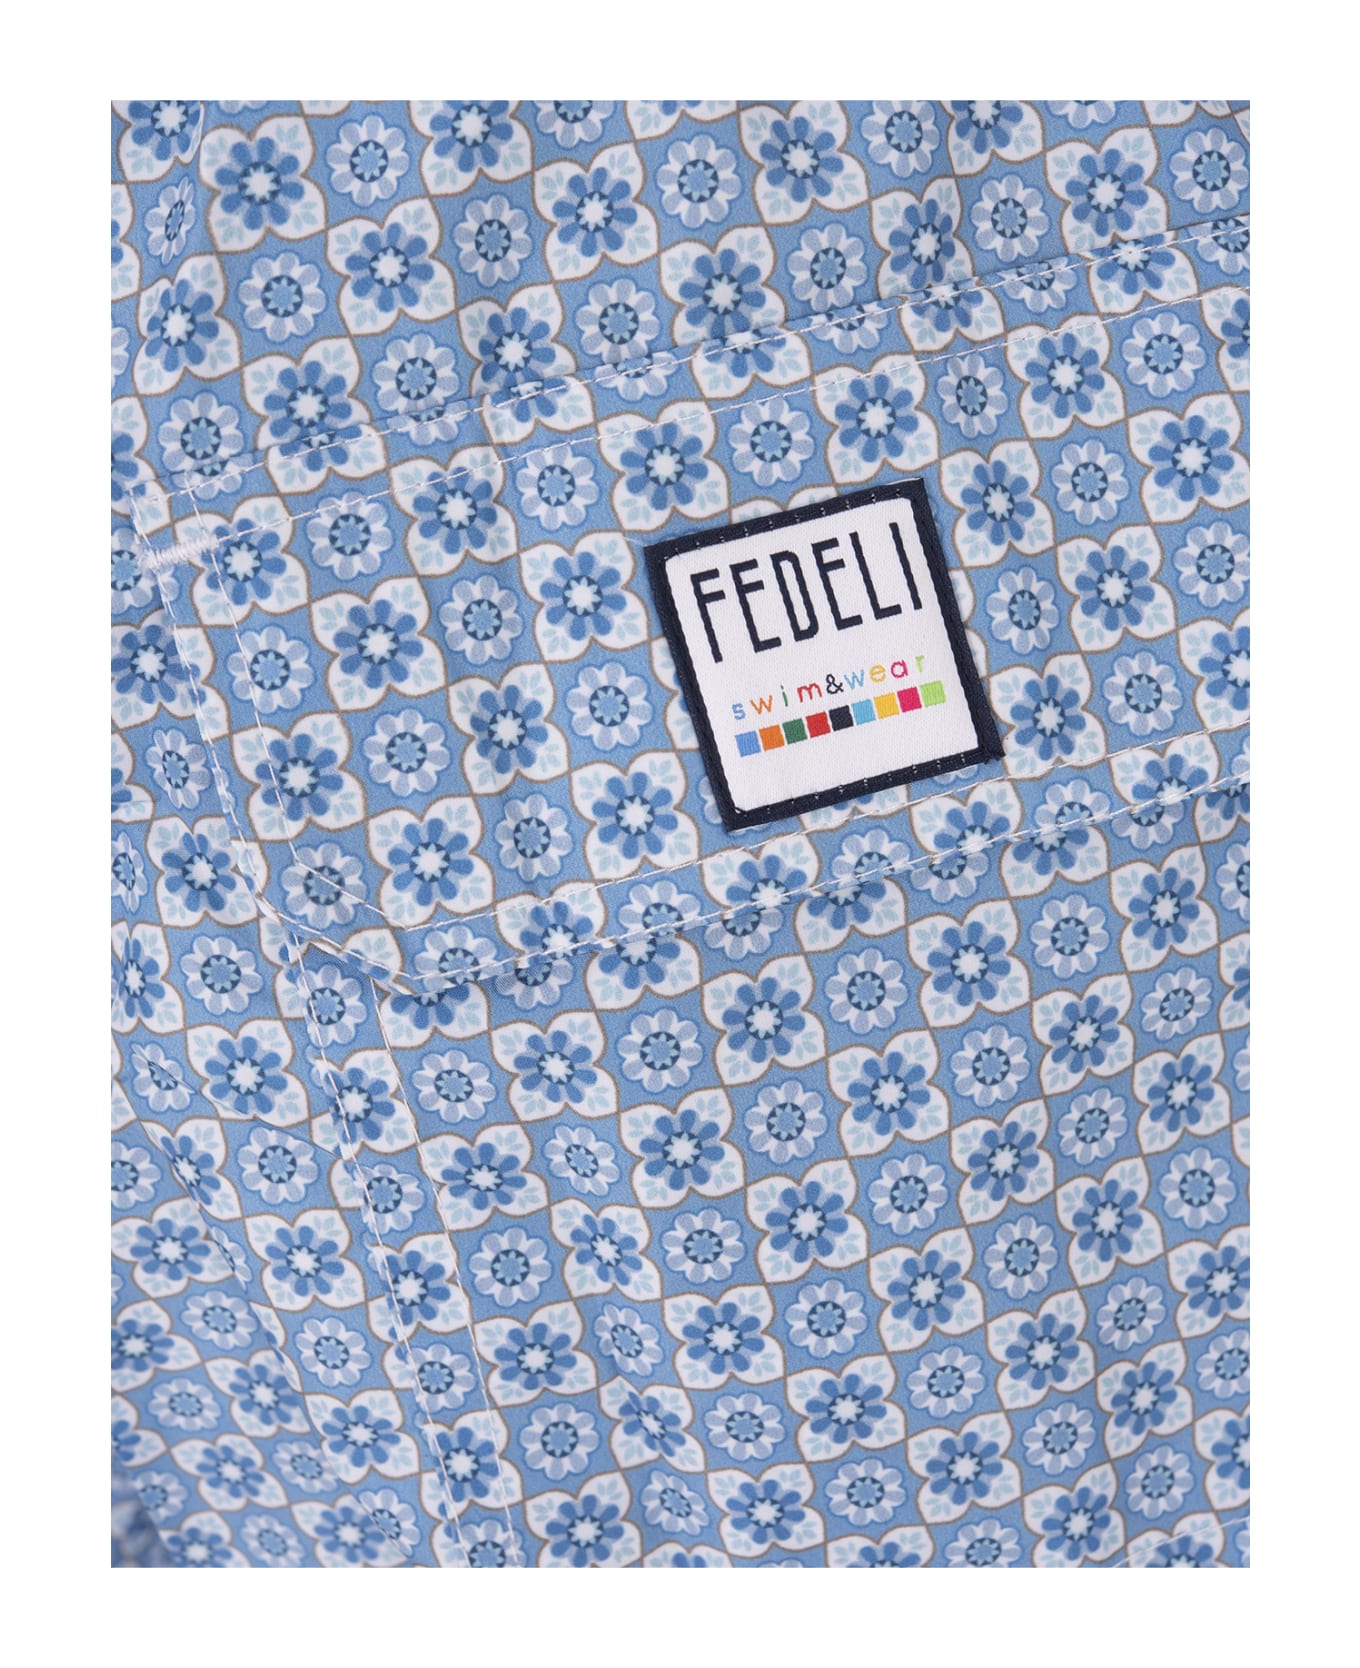 Fedeli Light Blue Swim Shorts With Flower Pattern - Blue